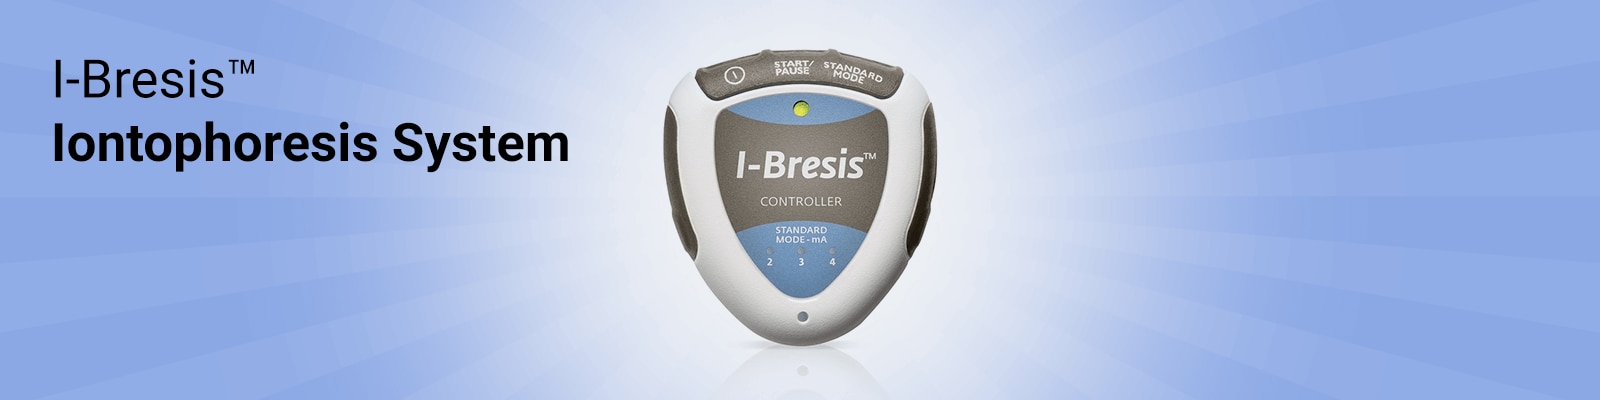 Sistema de iontoforesis I-Bresis™: Henry Schein Medical